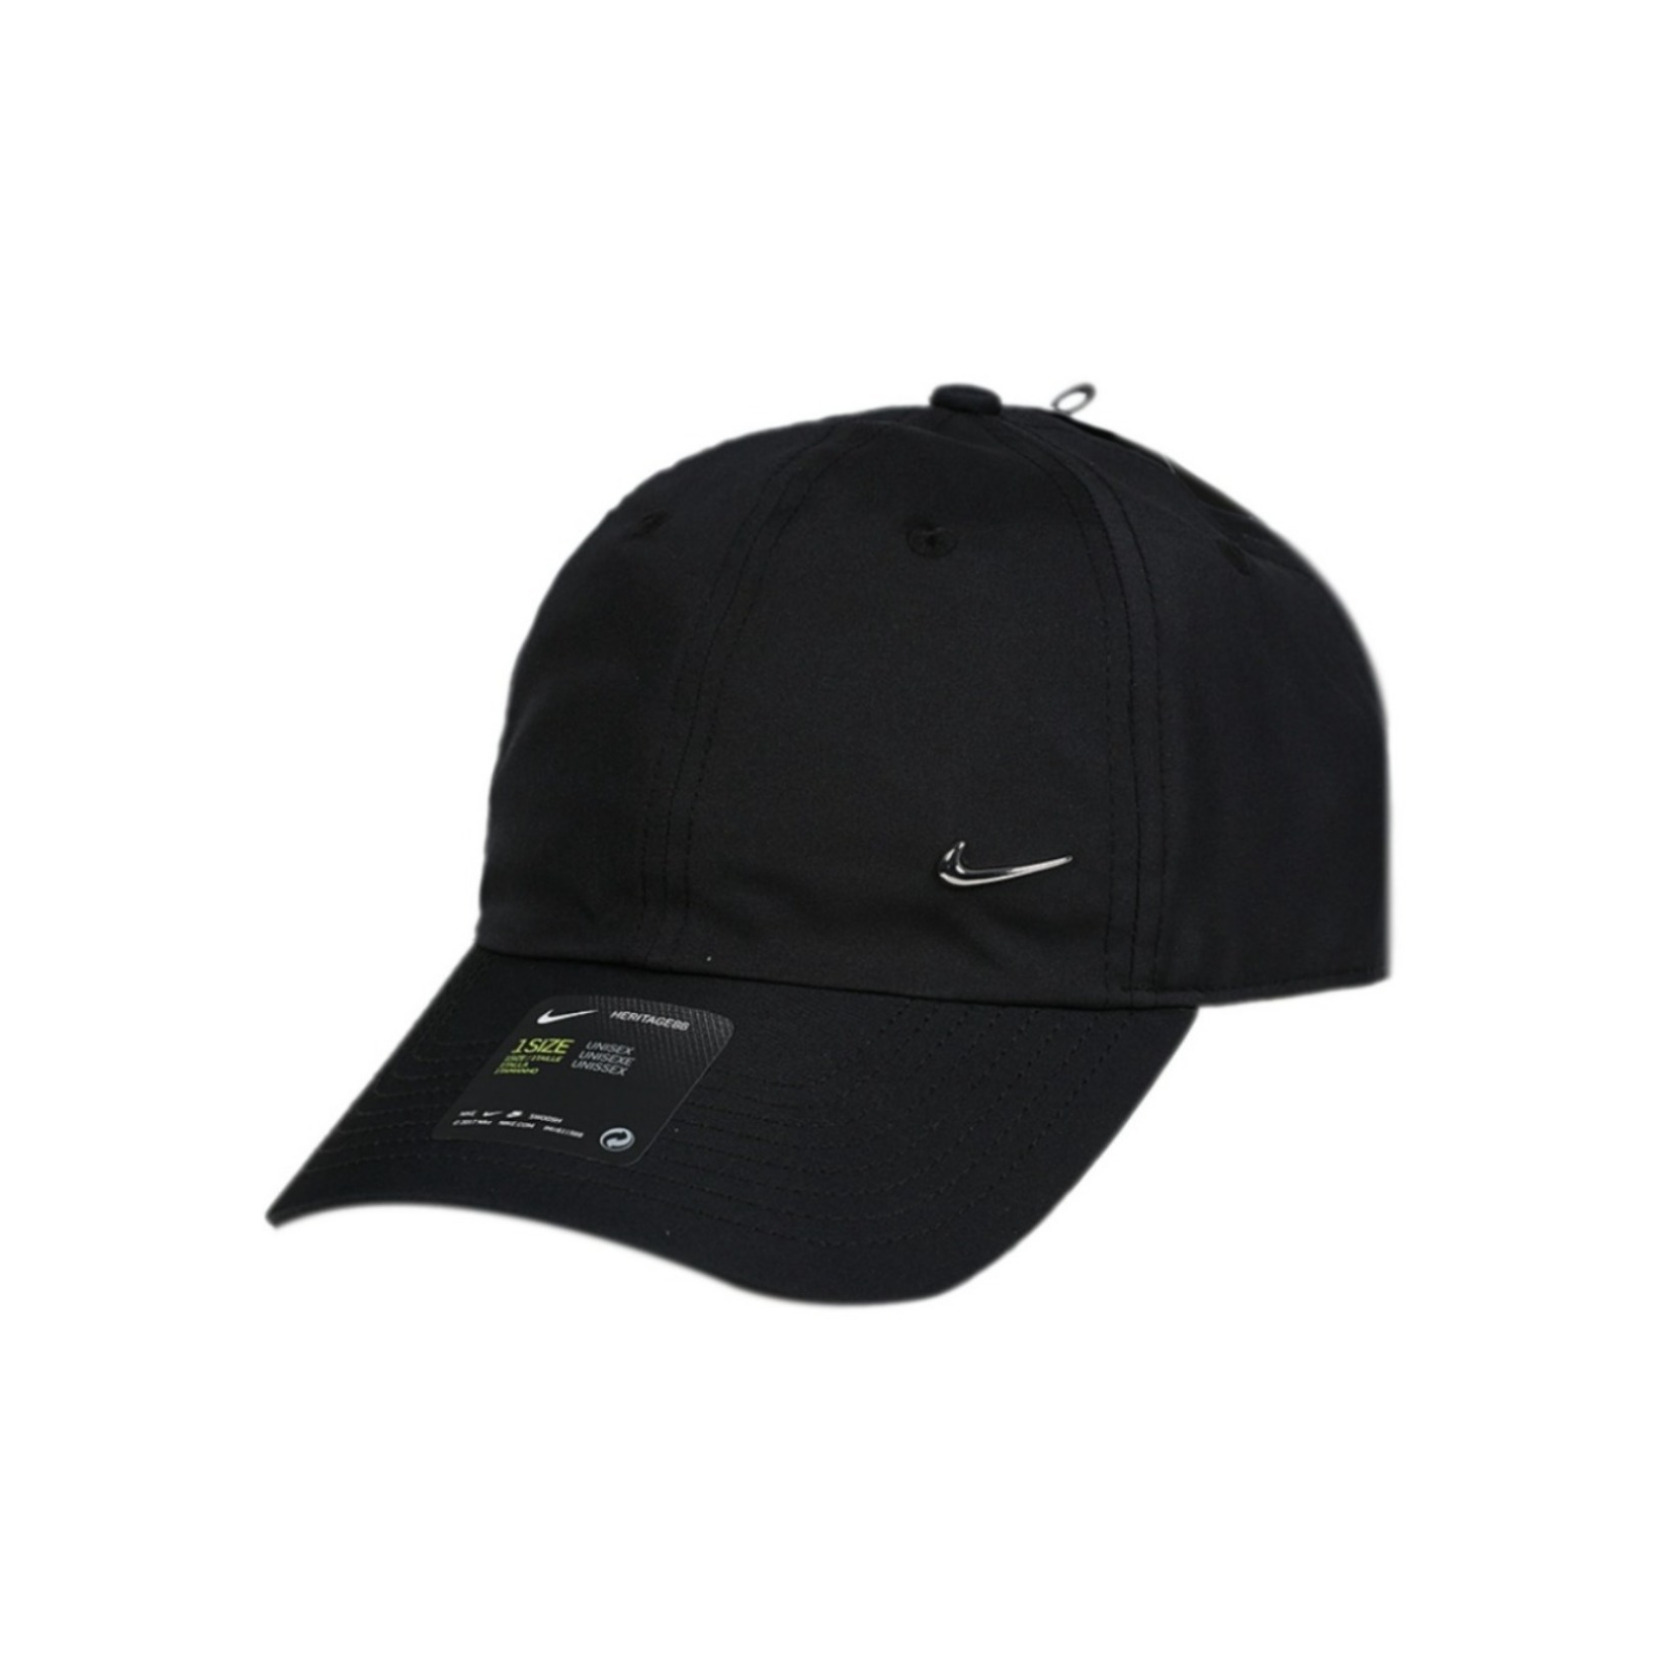 Nike/耐克 2020SS户外运动金属小logo鸭舌帽 943092